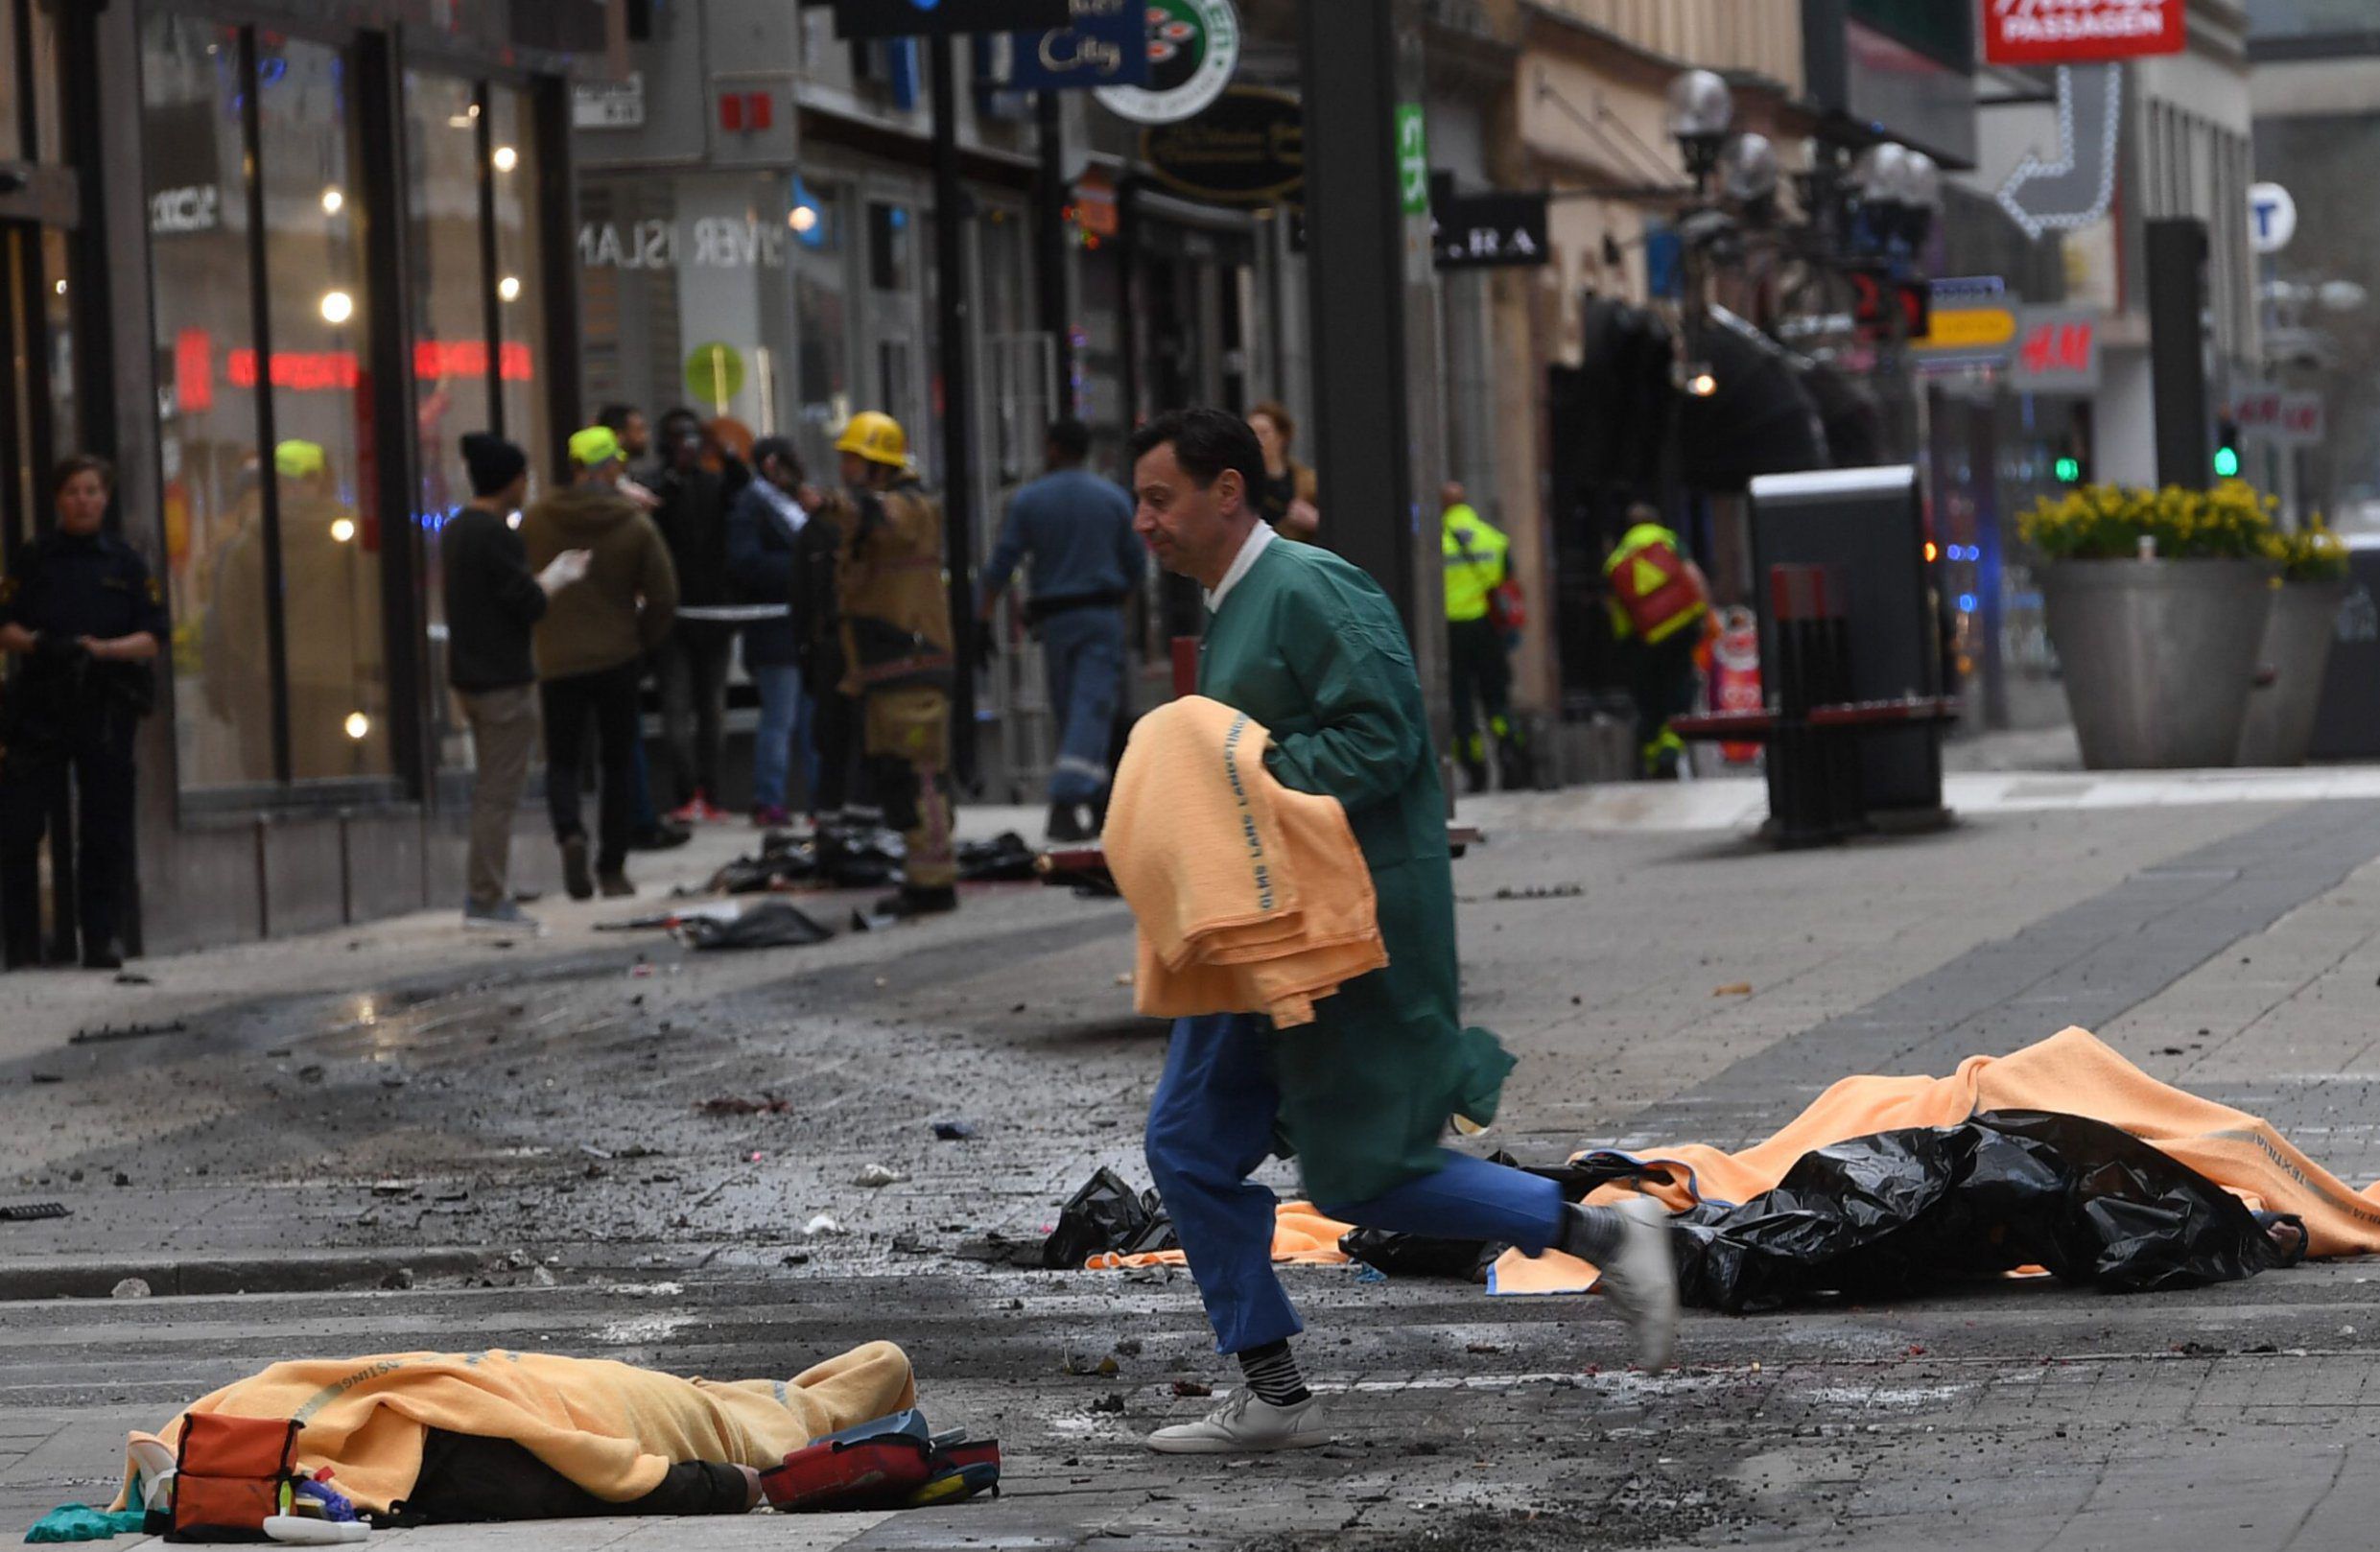 British man among four killed in Stockholm terror attack | Metro News